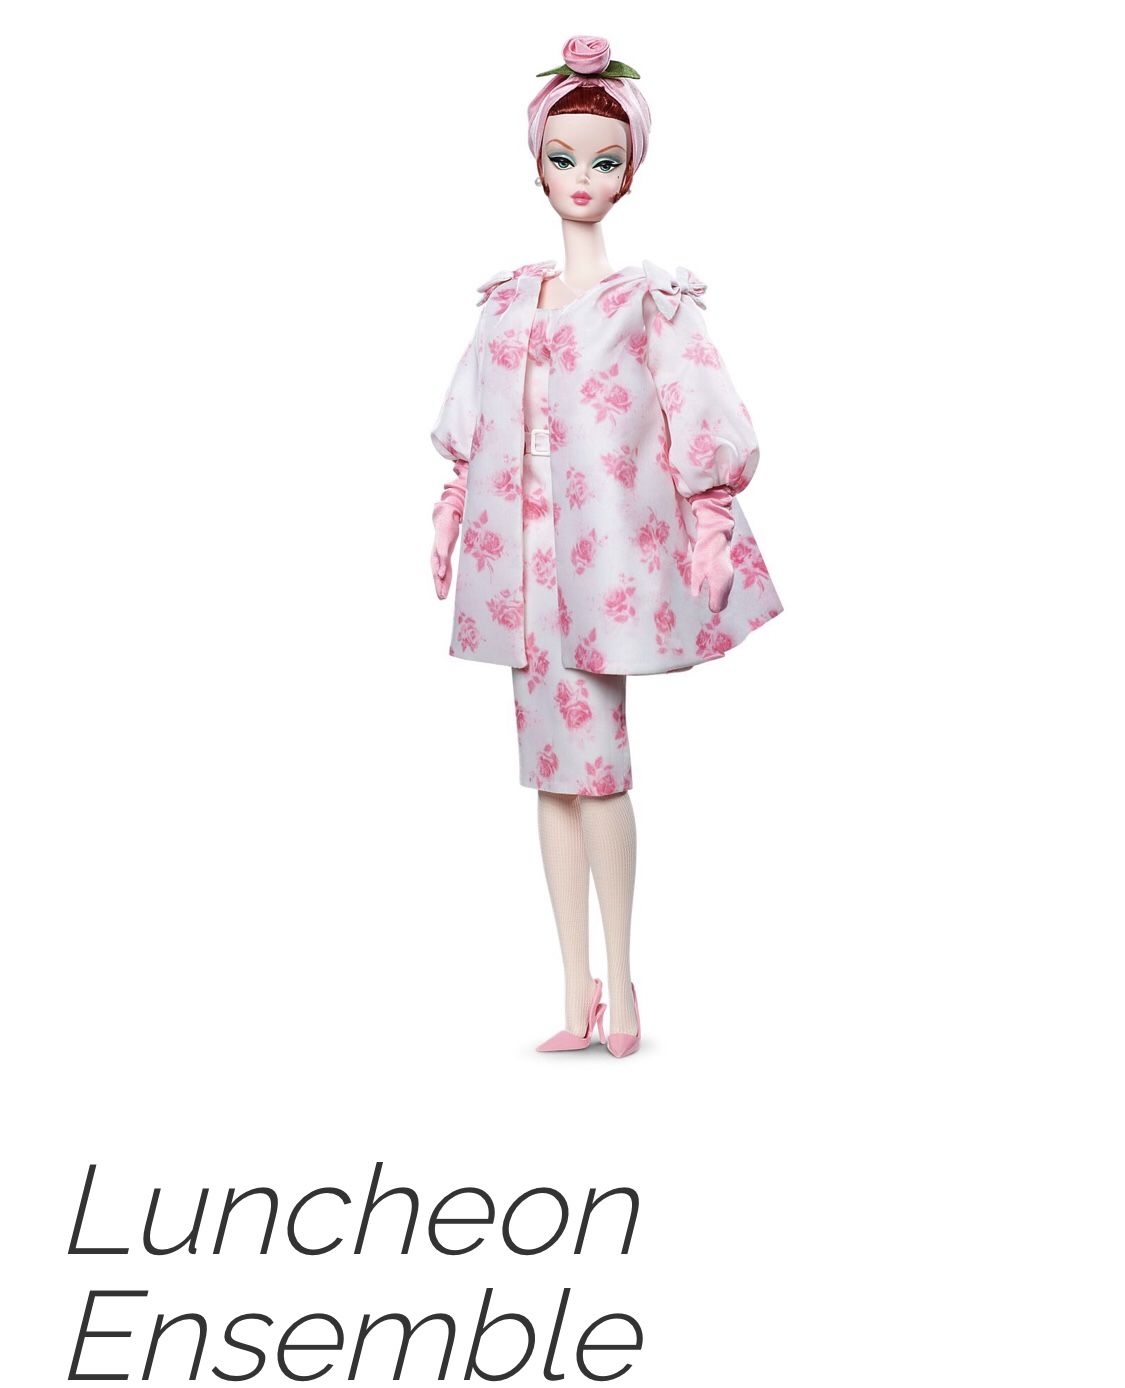 Silkstone barbie - Luncheon ensemble